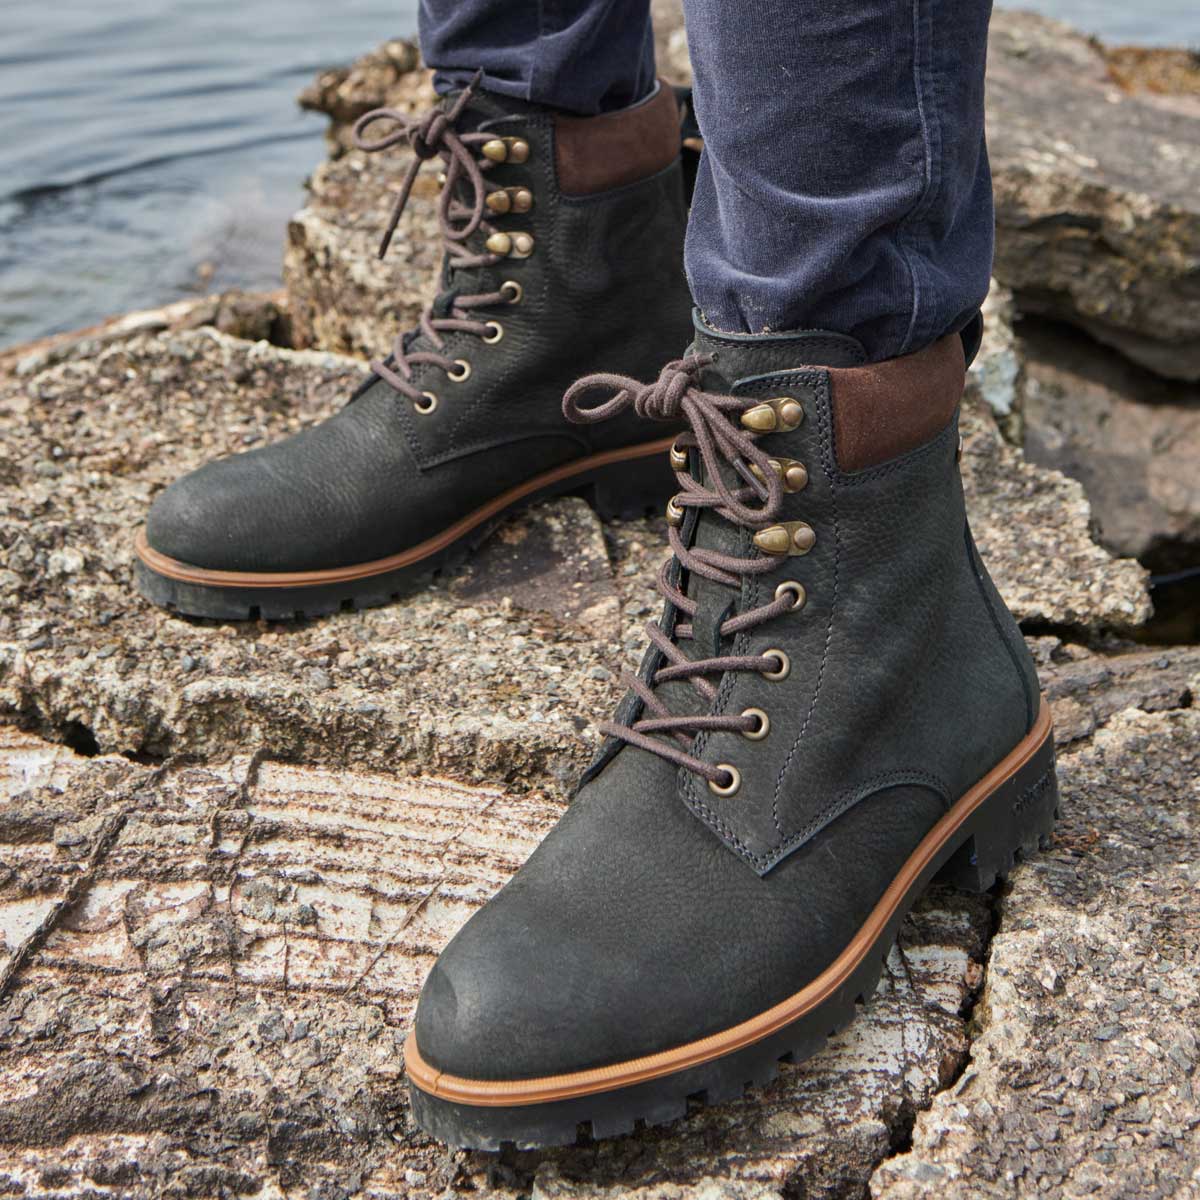 40% OFF DUBARRY Strokestown Hiking Style Boots - Womens - Black - Size: UK 6.5 (EU 40)